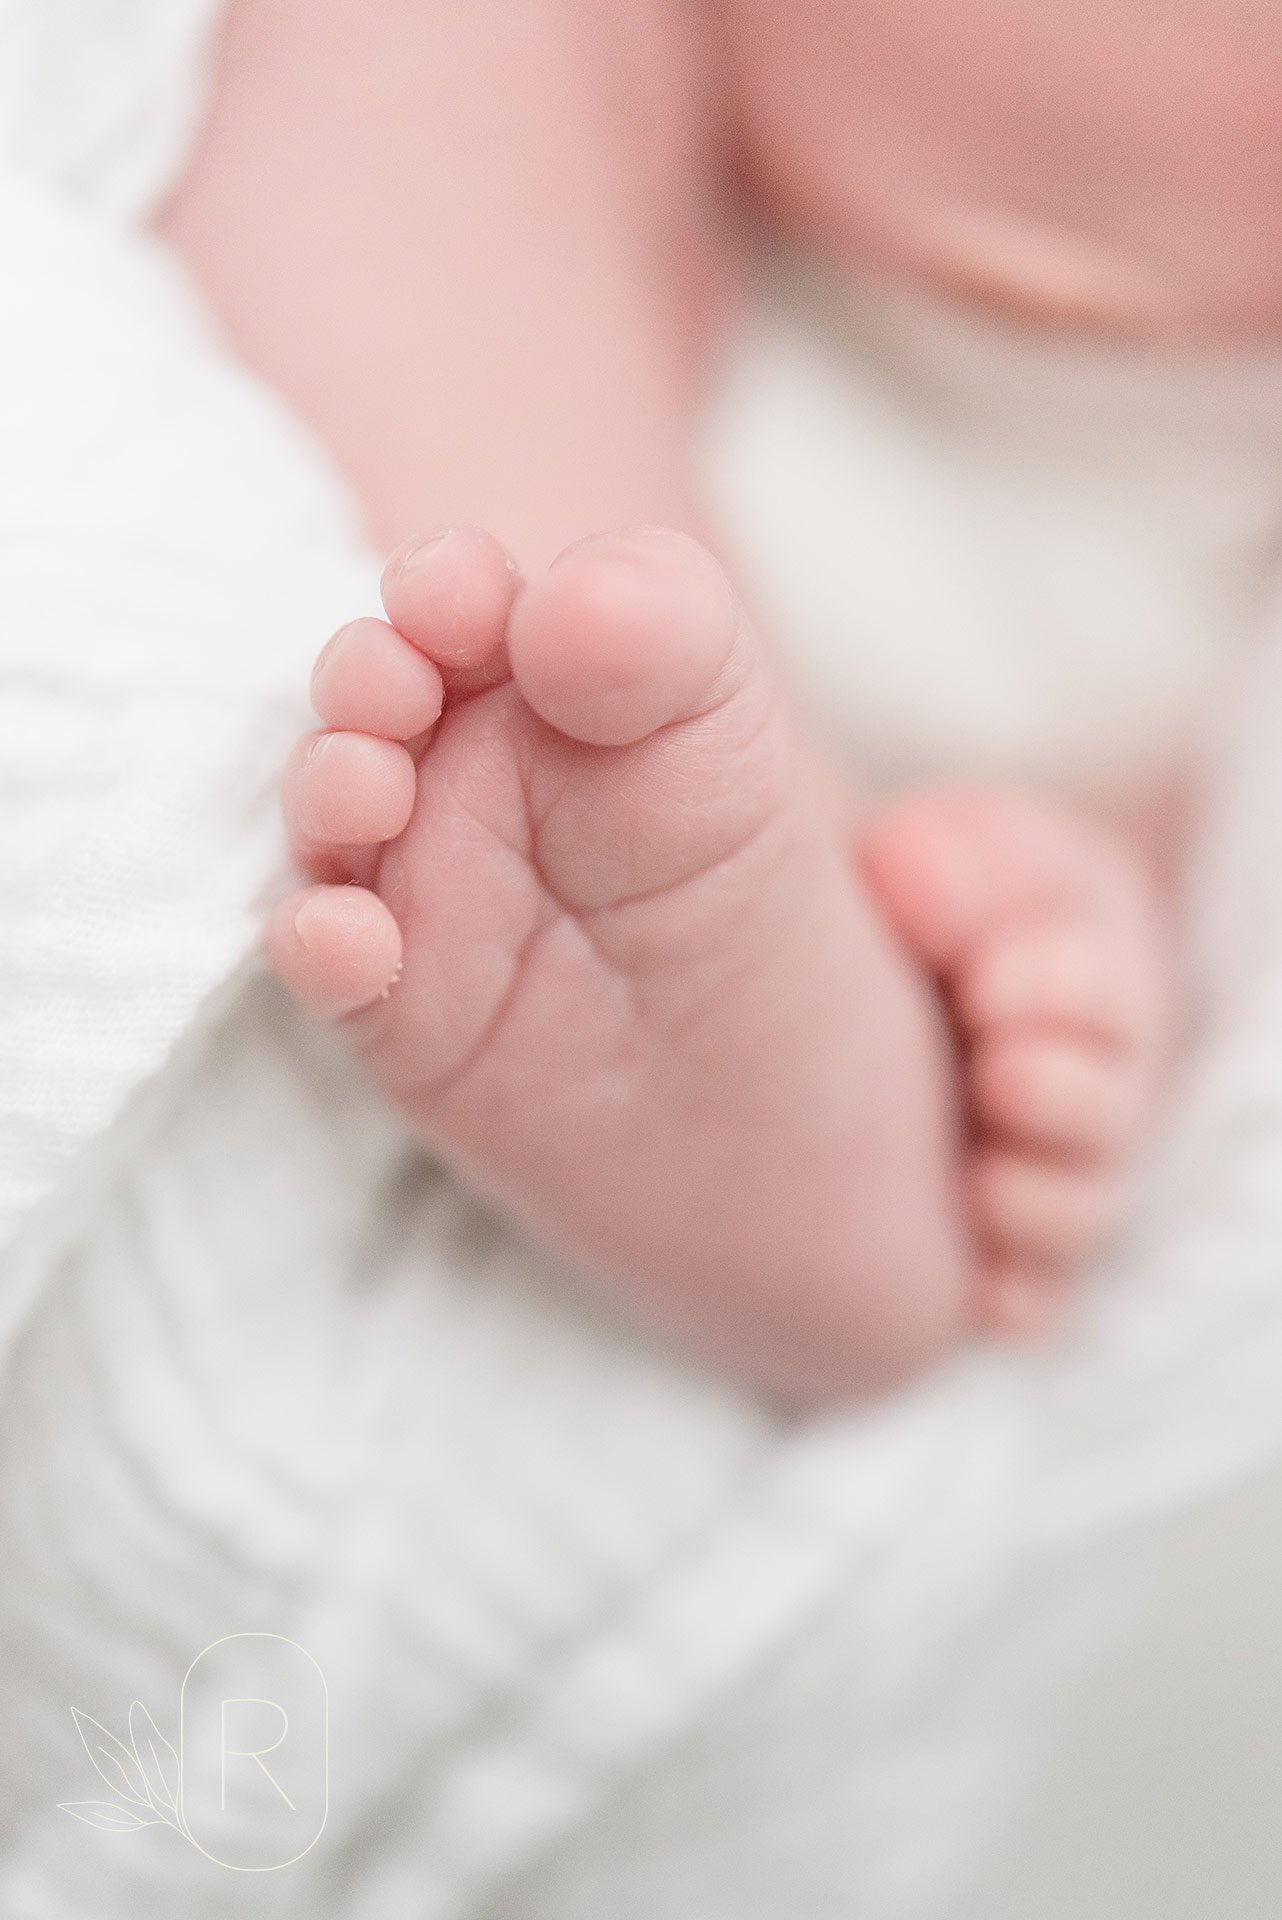 little-newborn-feet-remove-stress-preserve-memories-reflections-family-photographer-niagara-ontario.jpg